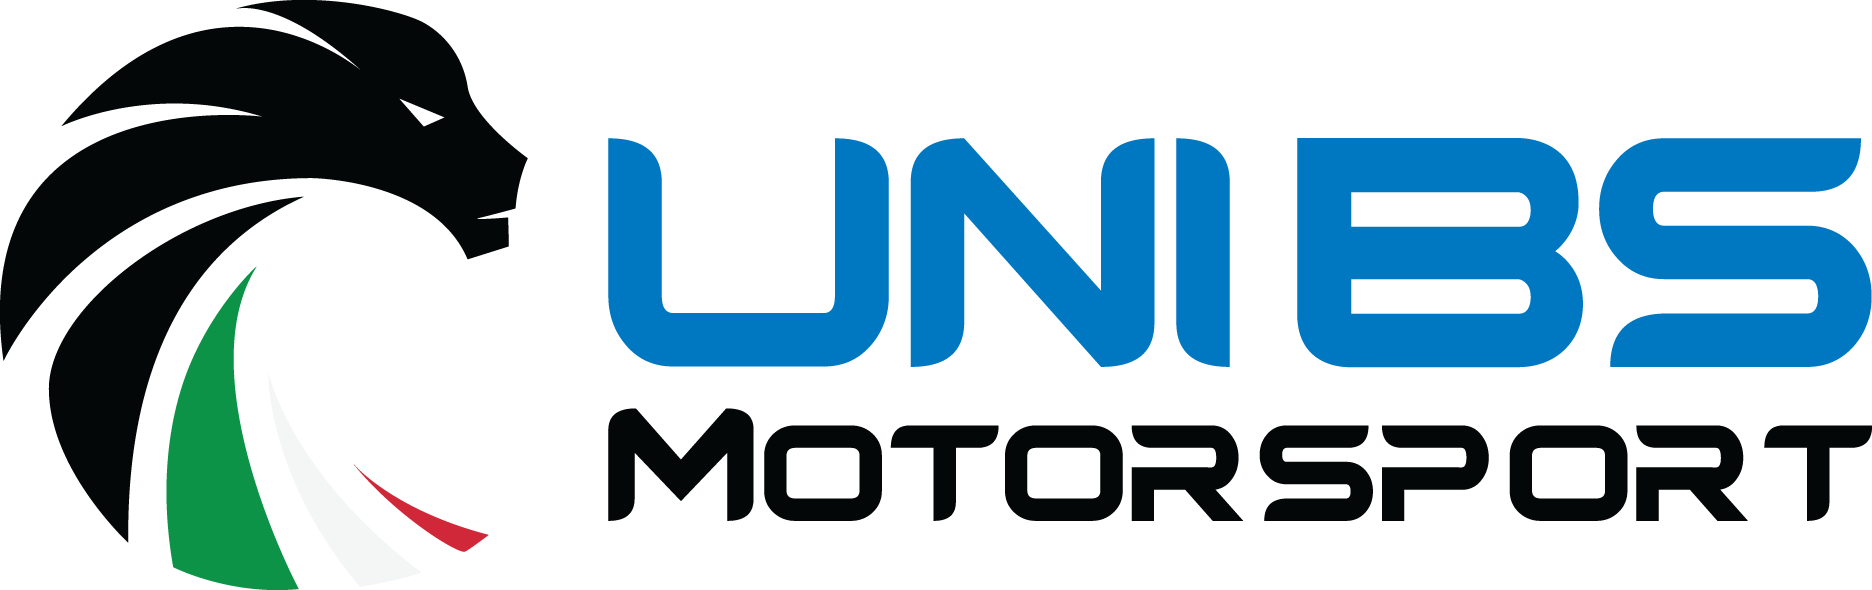 OMR UniBS Motorsport